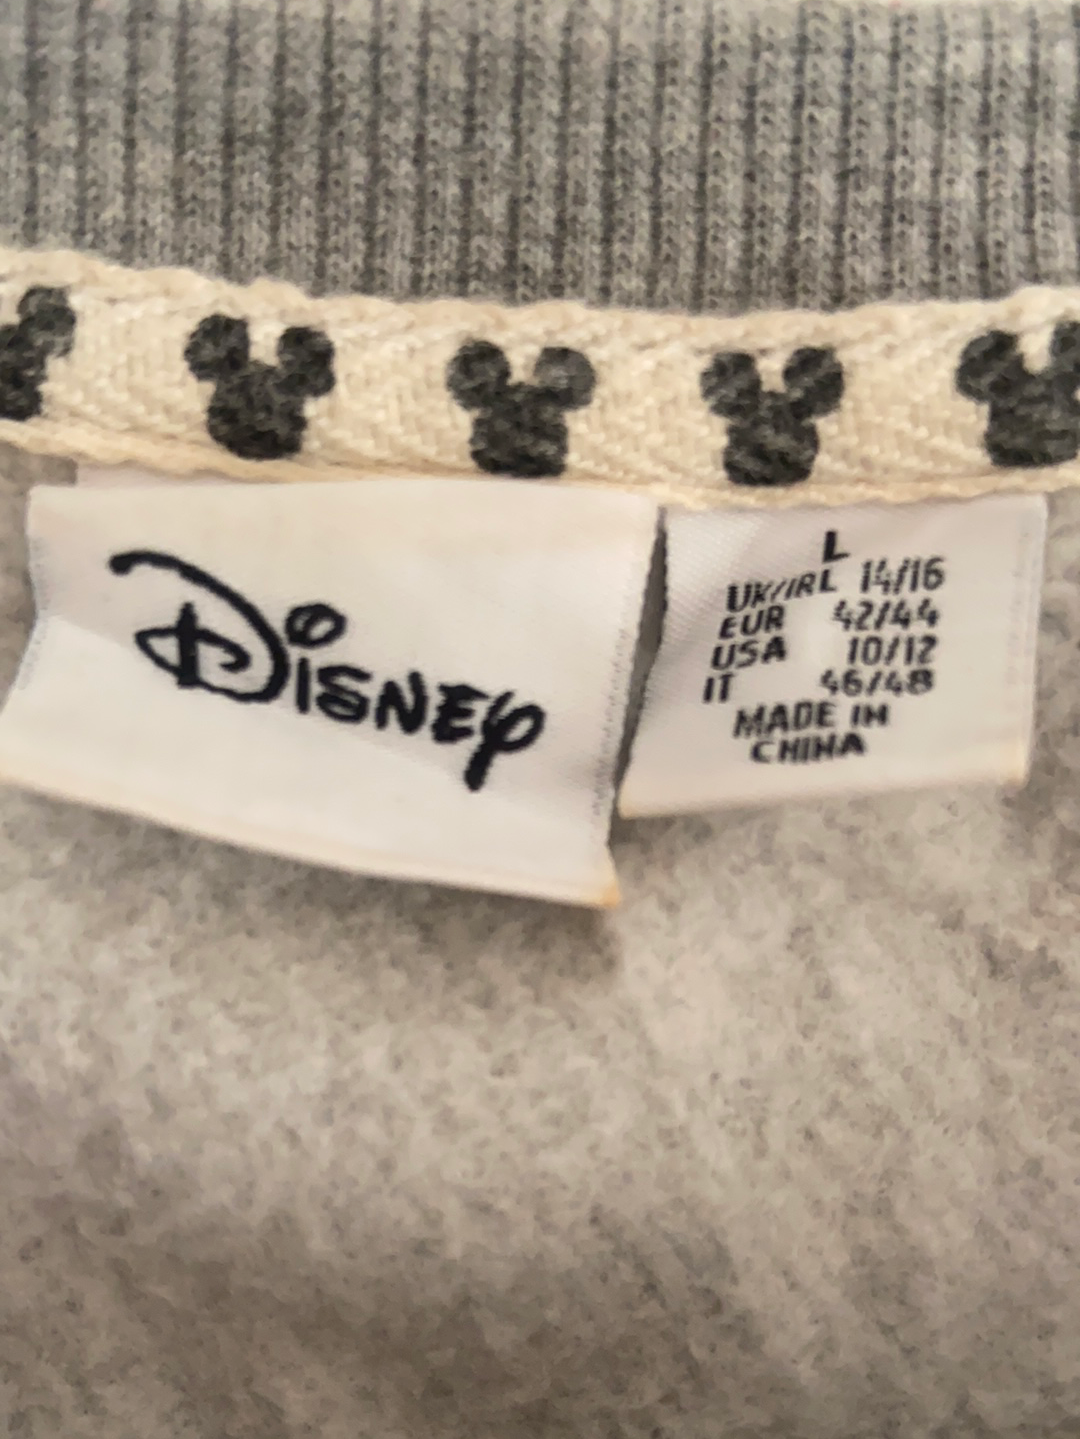 Vintage Disney Sweatshirt - Large